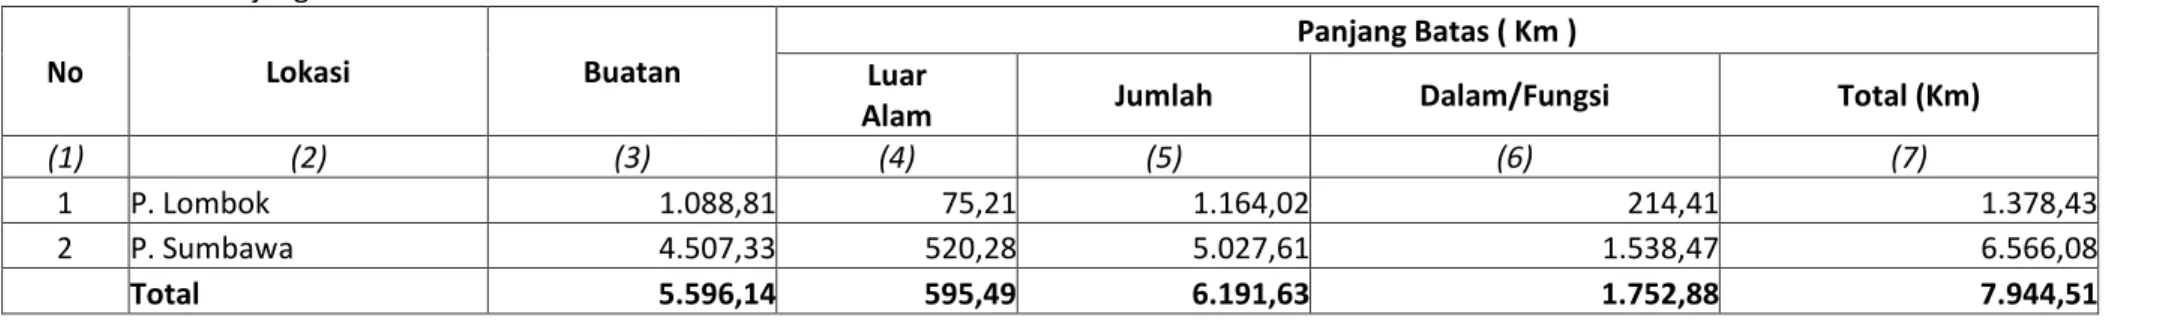 Tabel 3.1 Data Panjang Batas Kawasan Hutan Berdasarkan Tata Batas P. Lombok Dan P. Sumbawa 